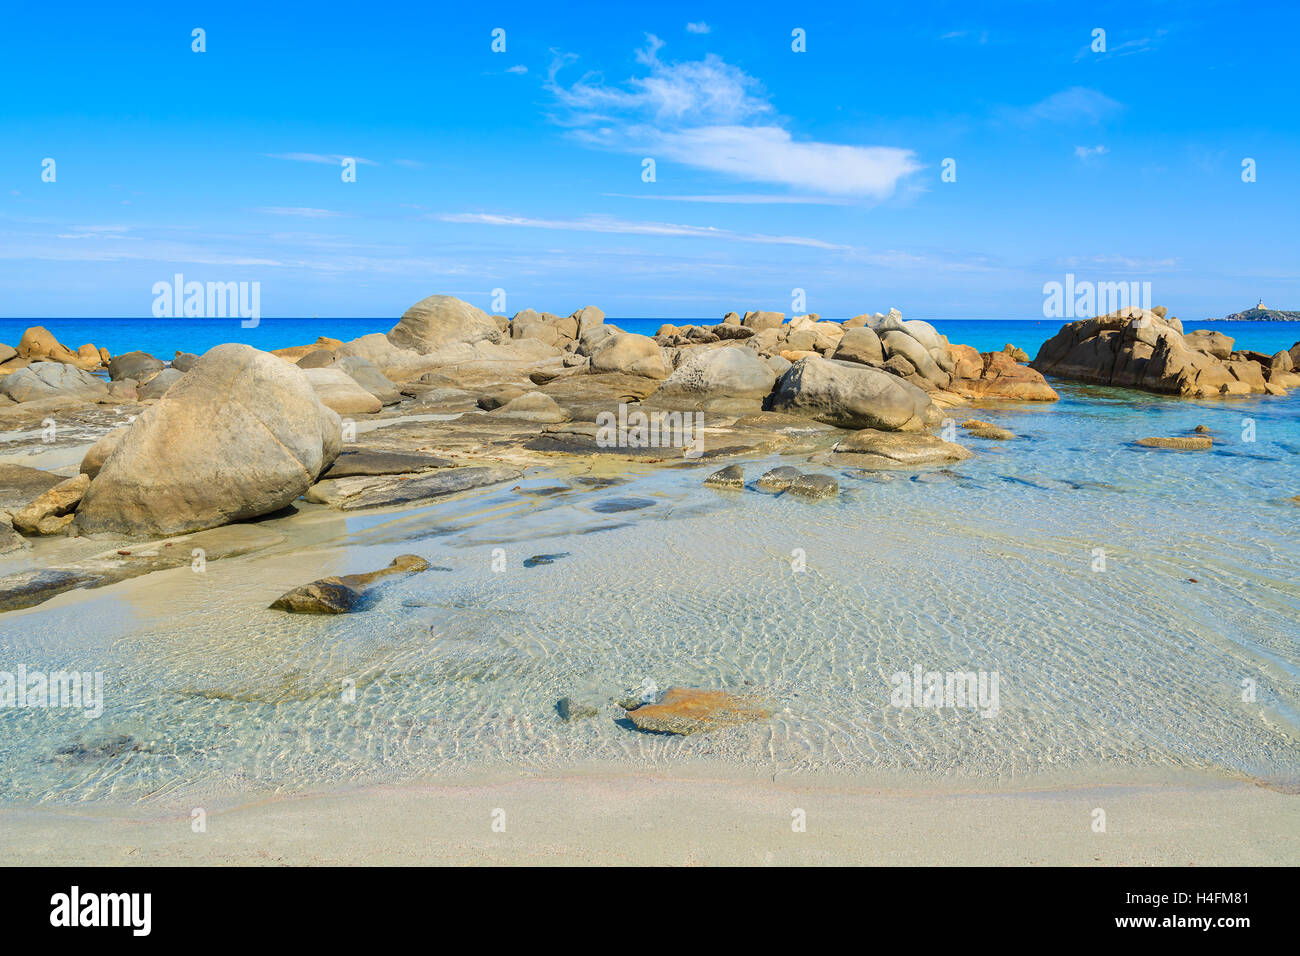 Rocks in shallow crystal clear turquoise sea water of Porto Giunco beach, Sardinia island, Italy Stock Photo